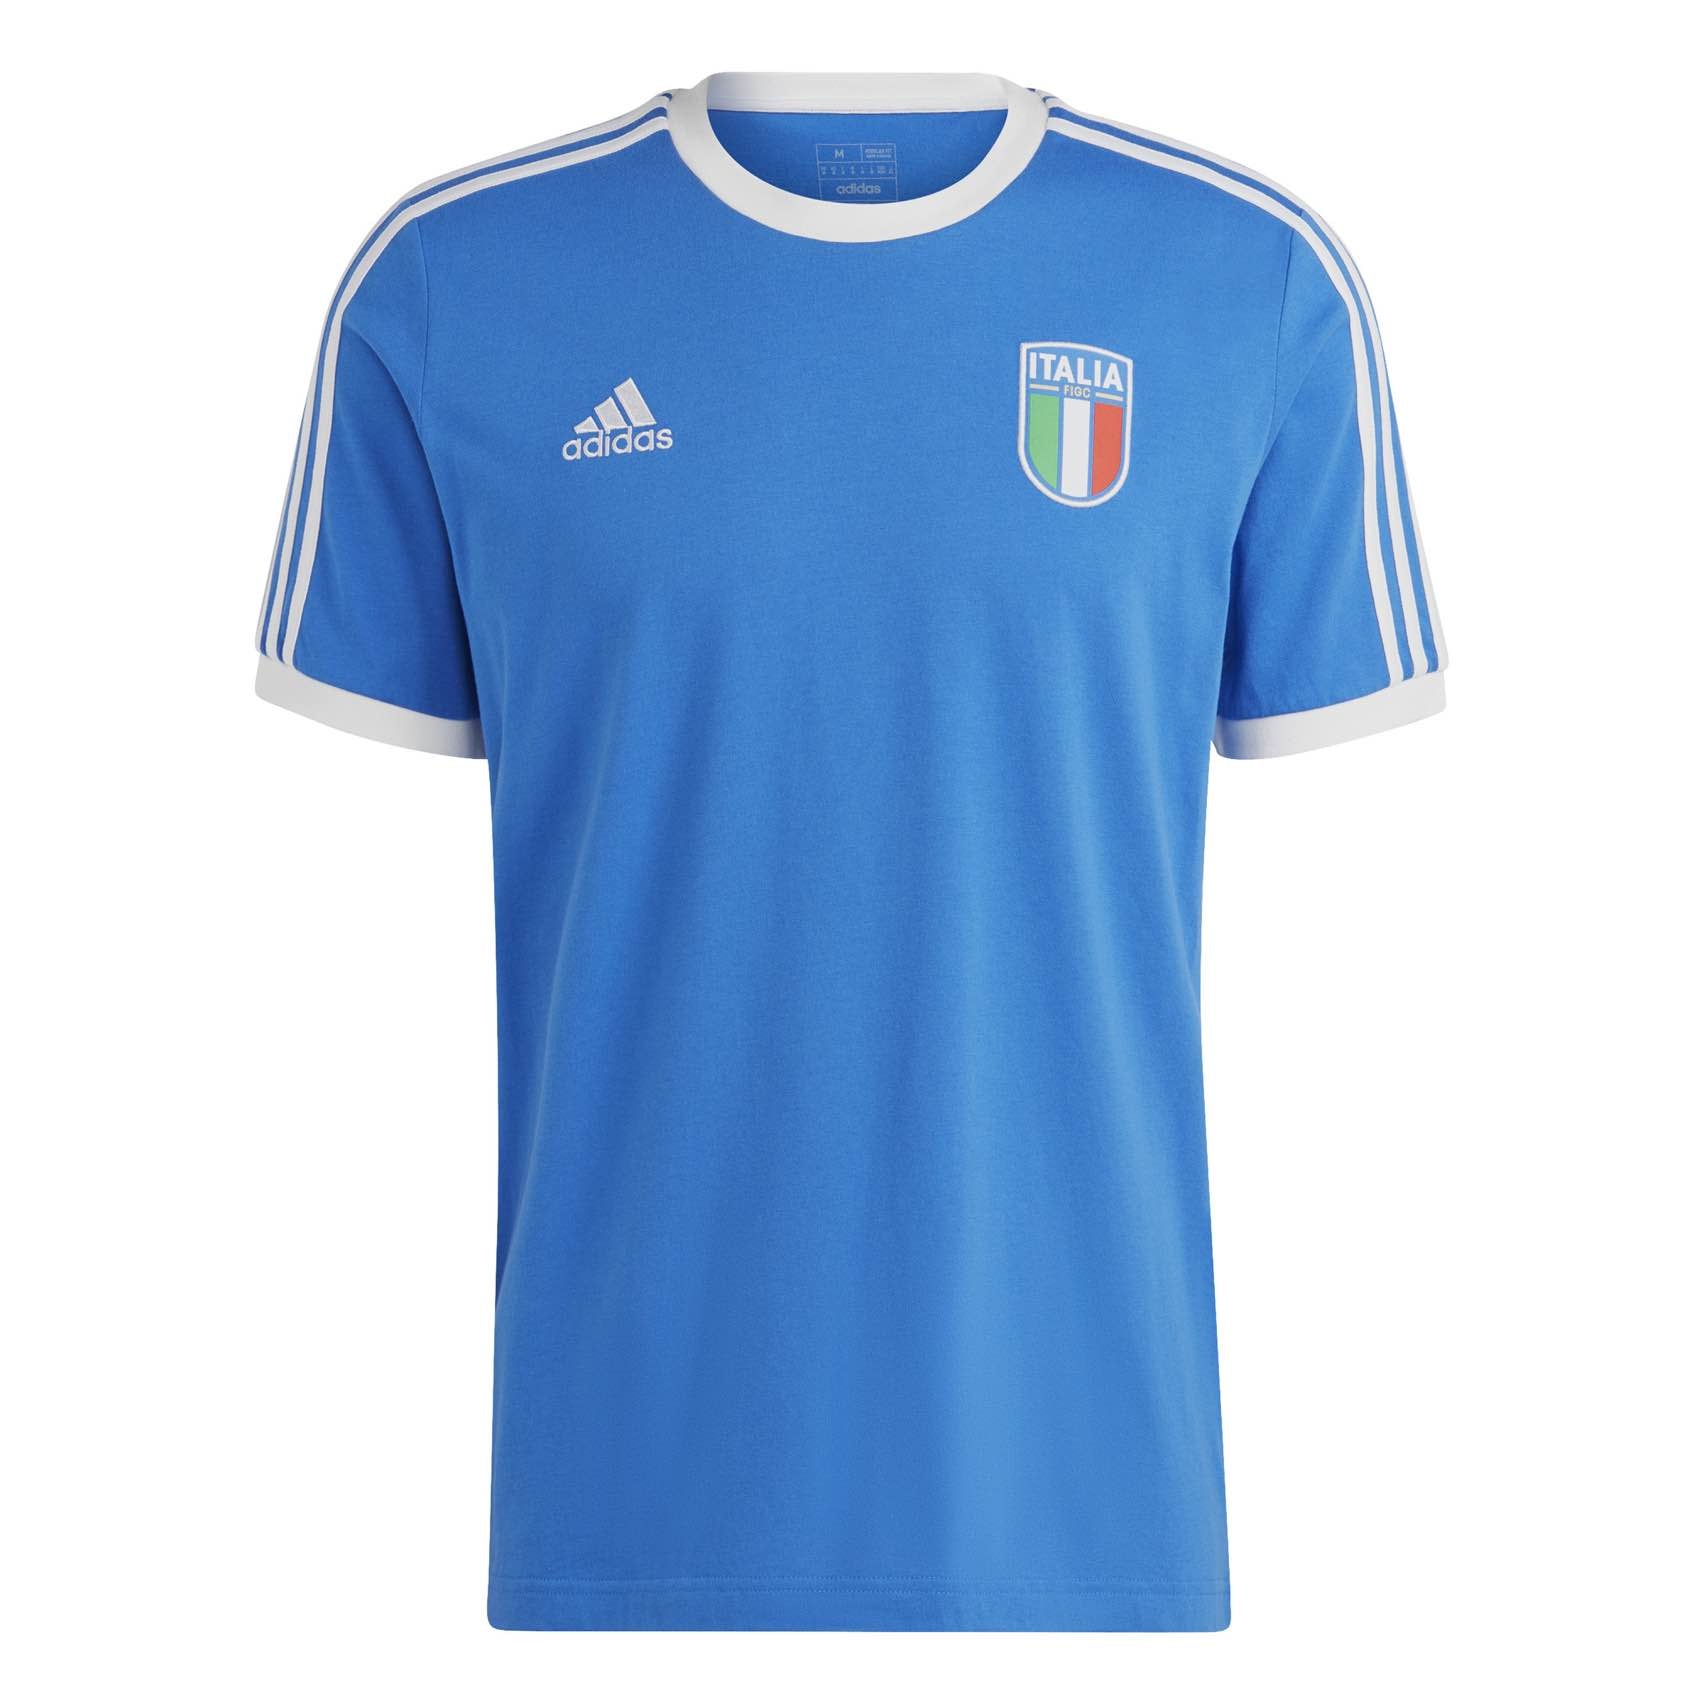 Italy 3-Stripes Tee